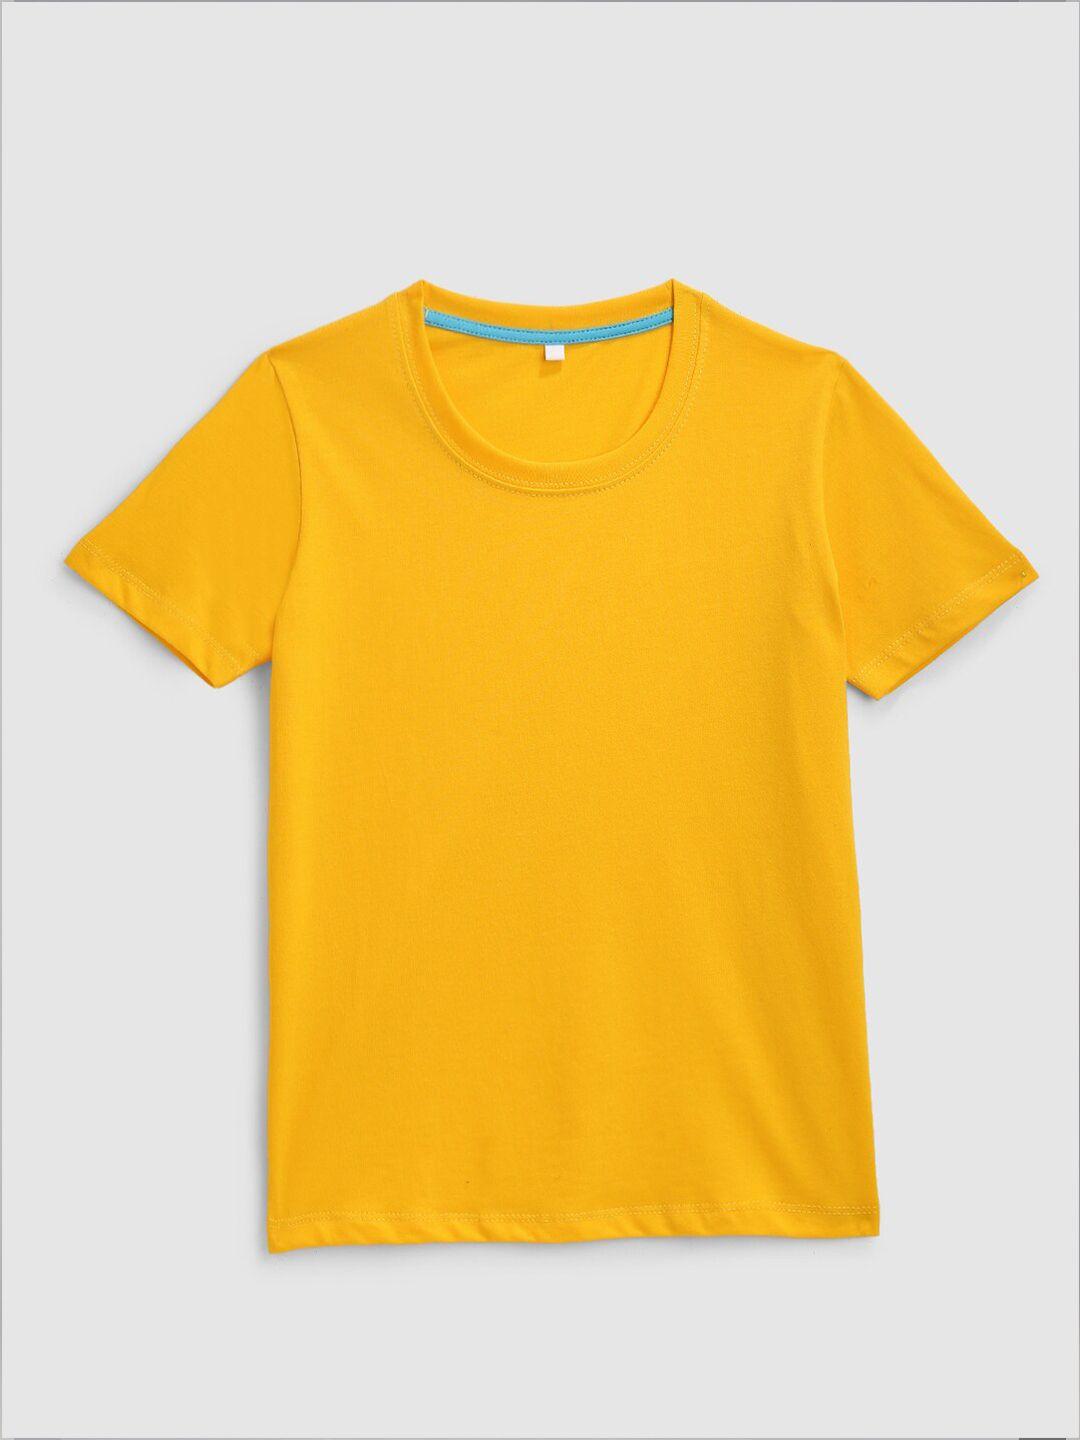 kidscraft boys yellow running t-shirt